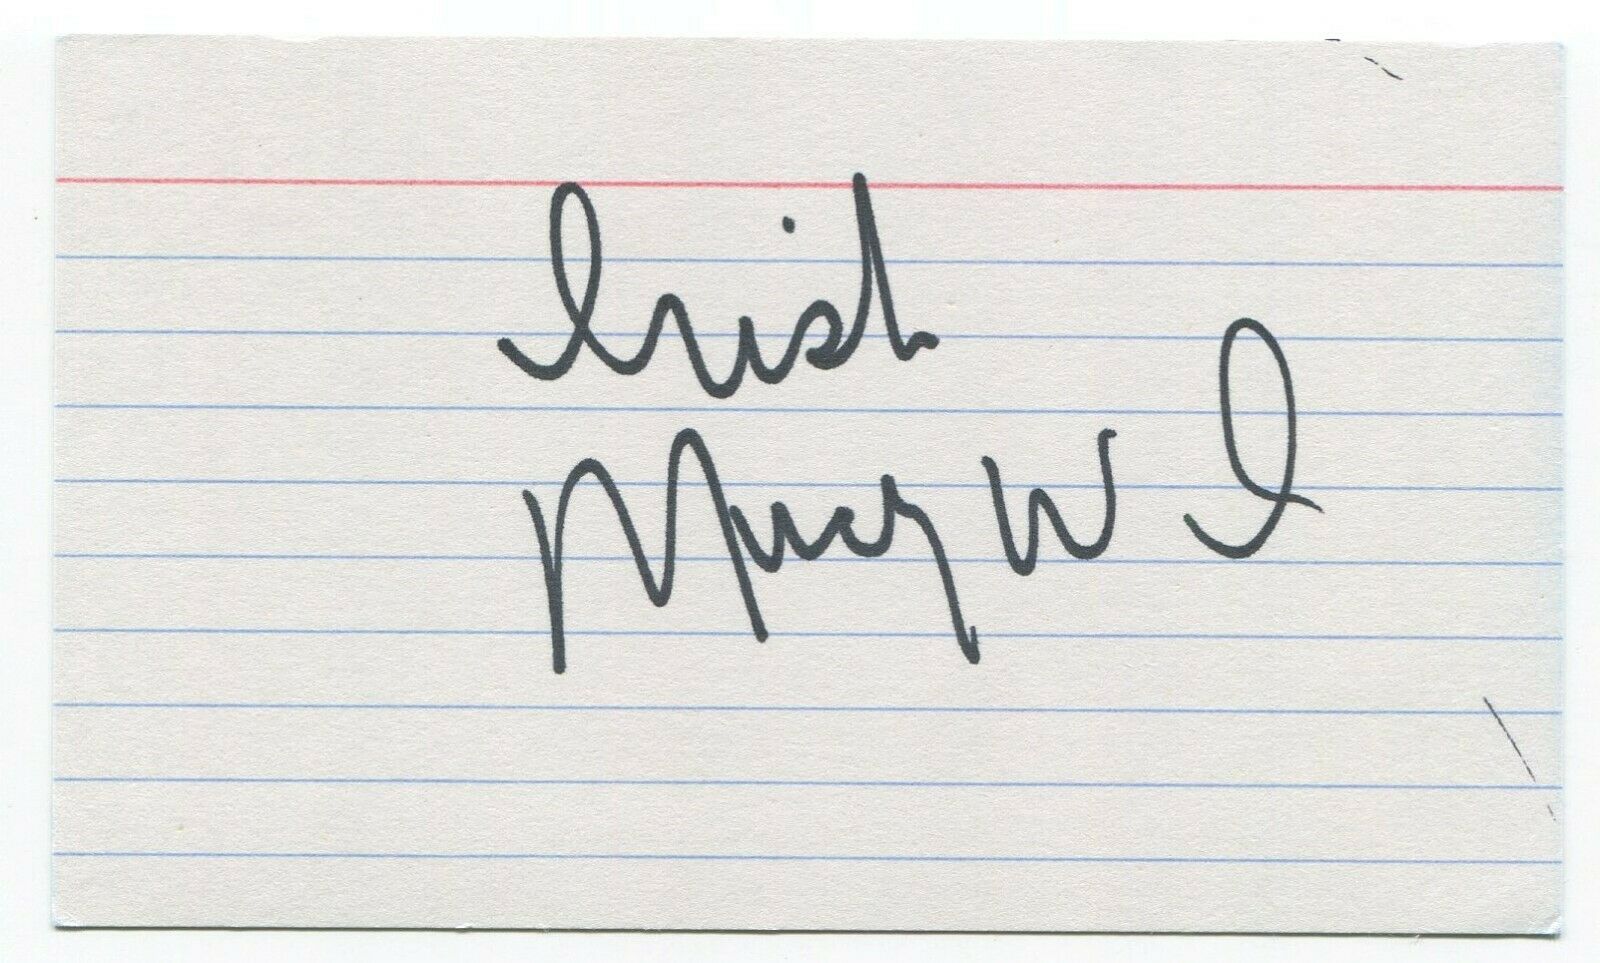 Irish Micky Ward Signed 3x5 Index Card Autographed Signature Boxing